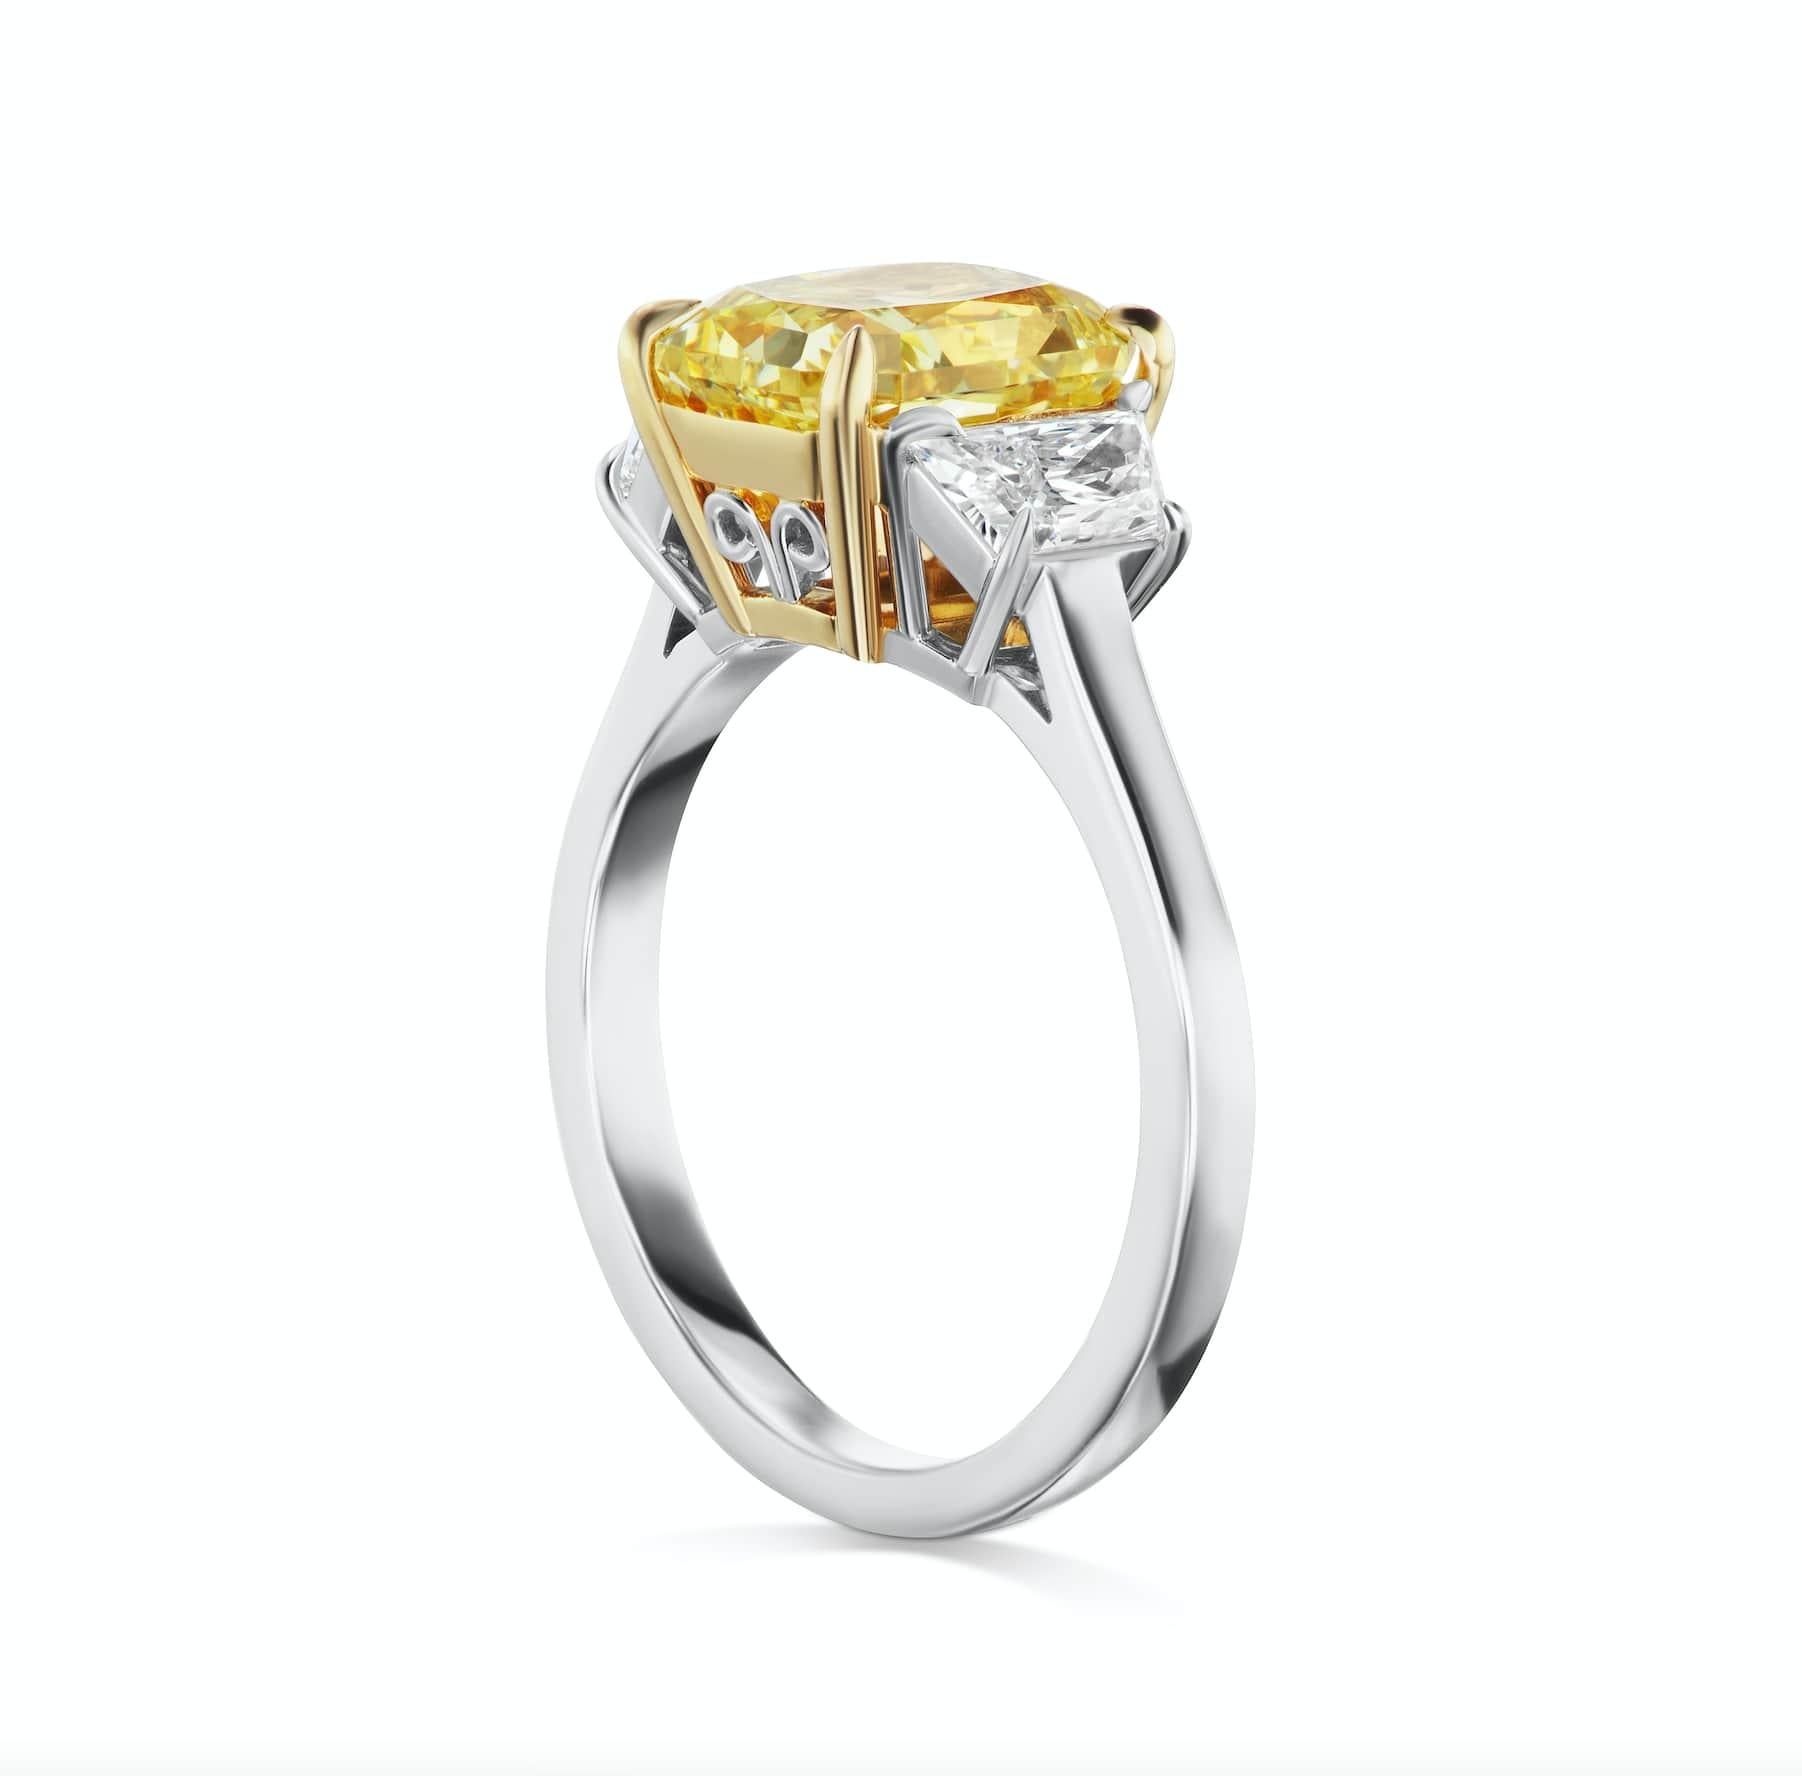 5 carat radiant diamond ring